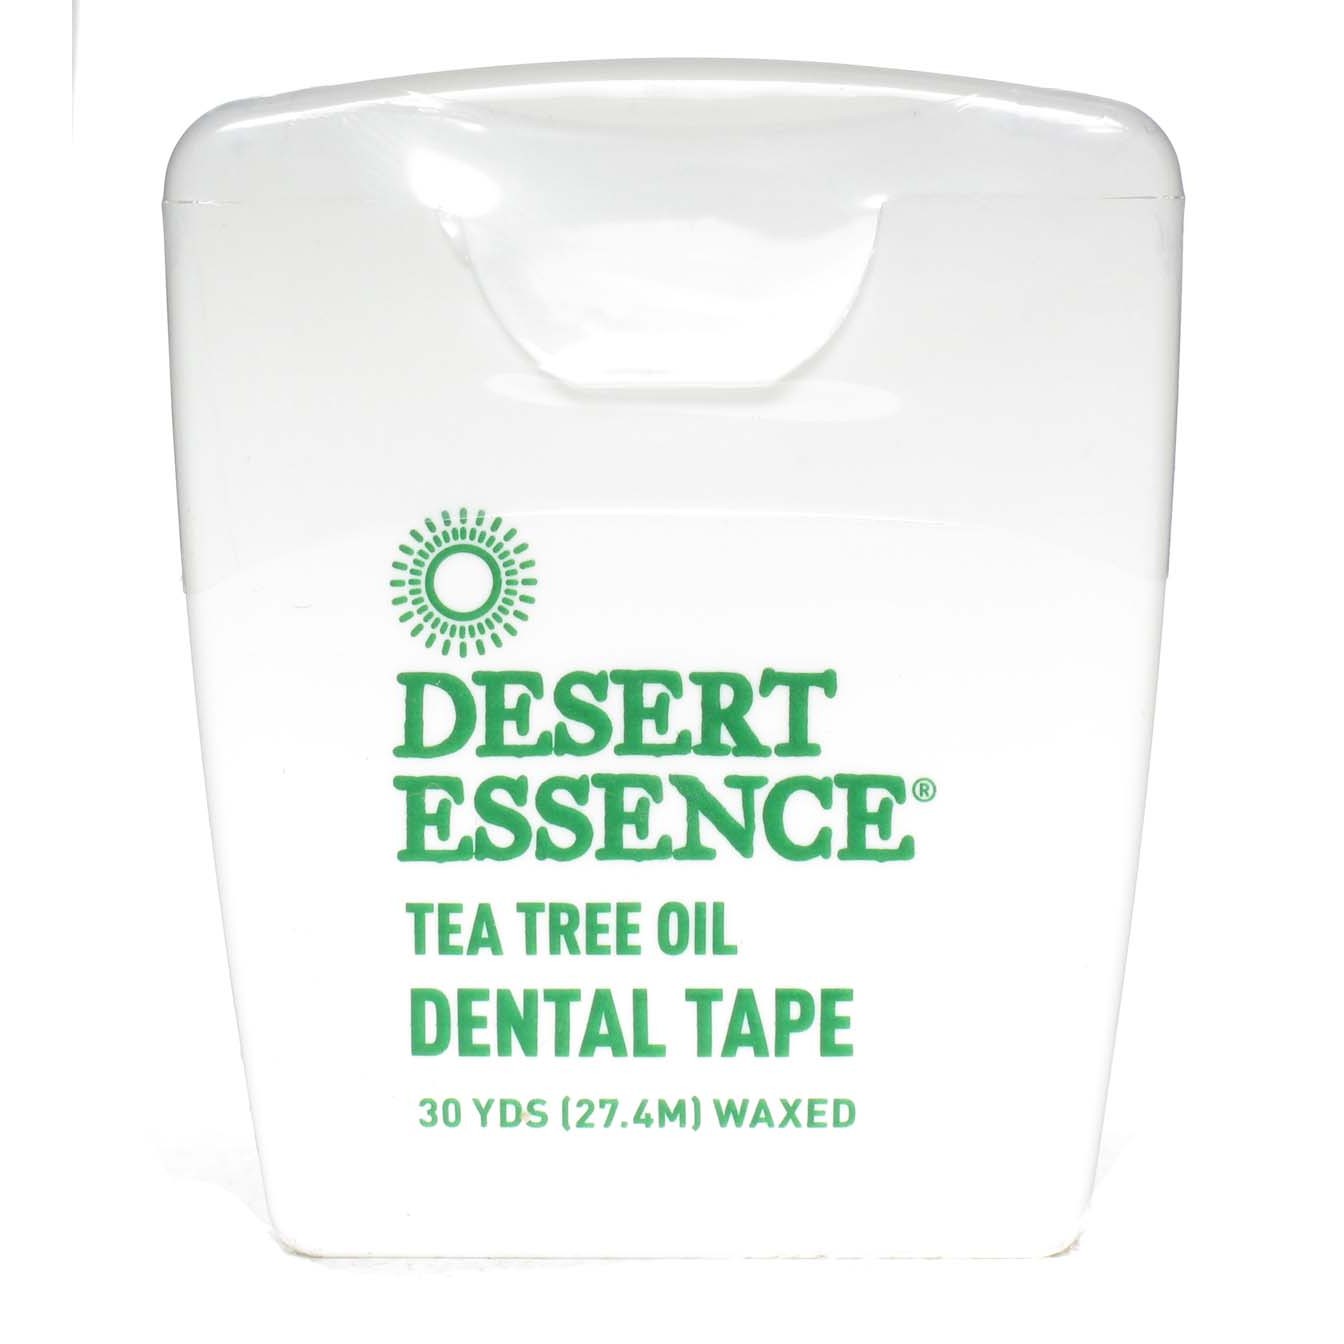 Desert Essence Dental Tape (6x30 YD)